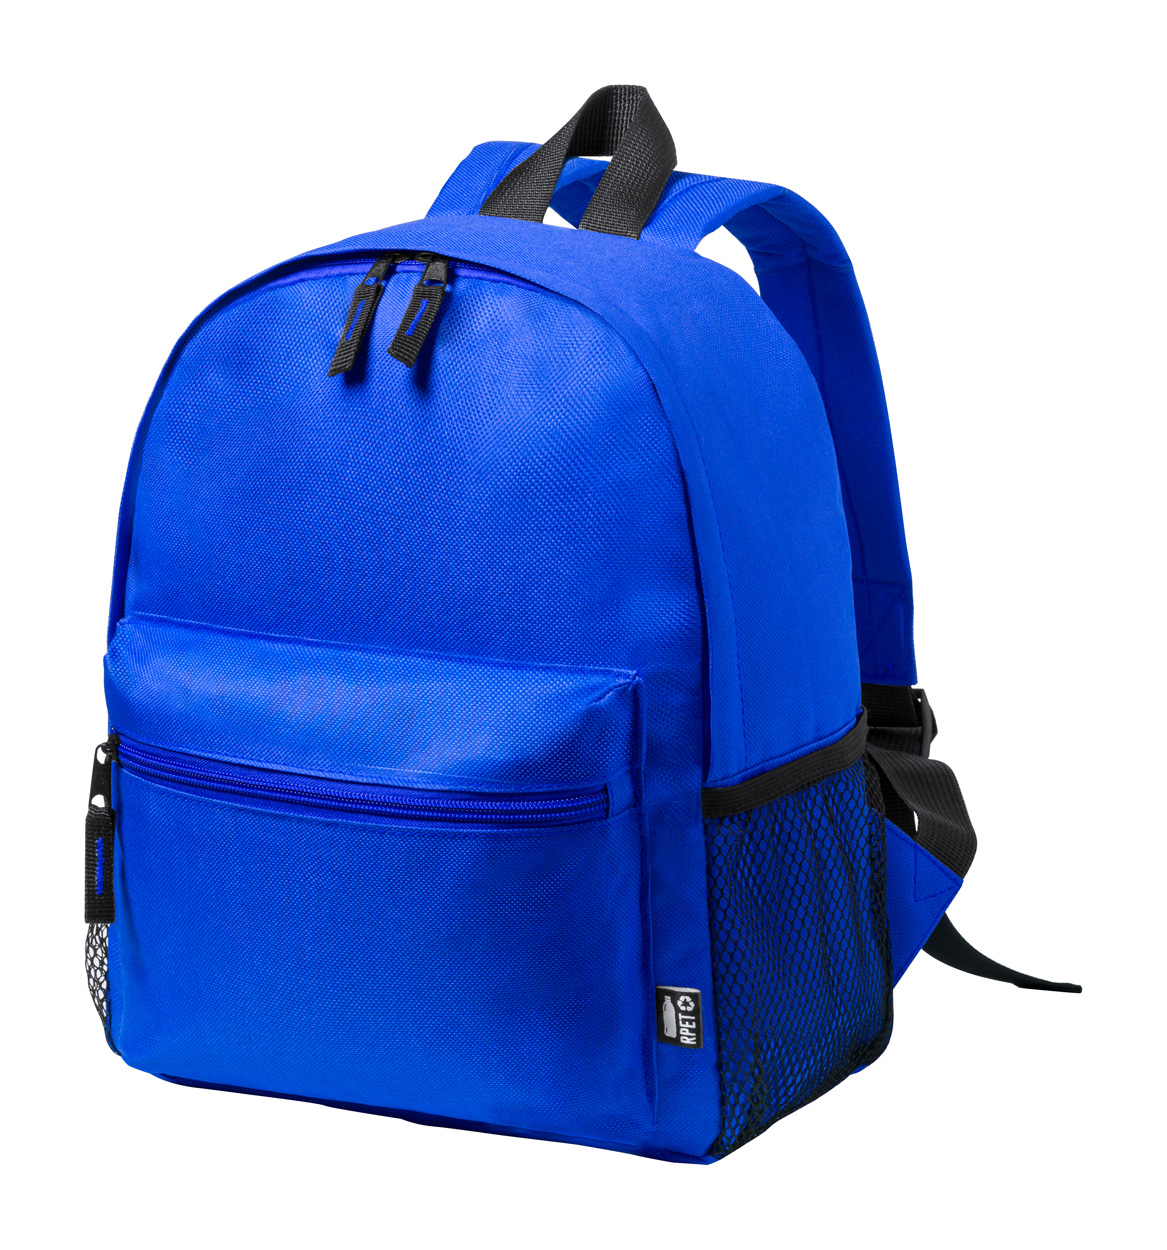 Maggie RPET backpack for children - blue